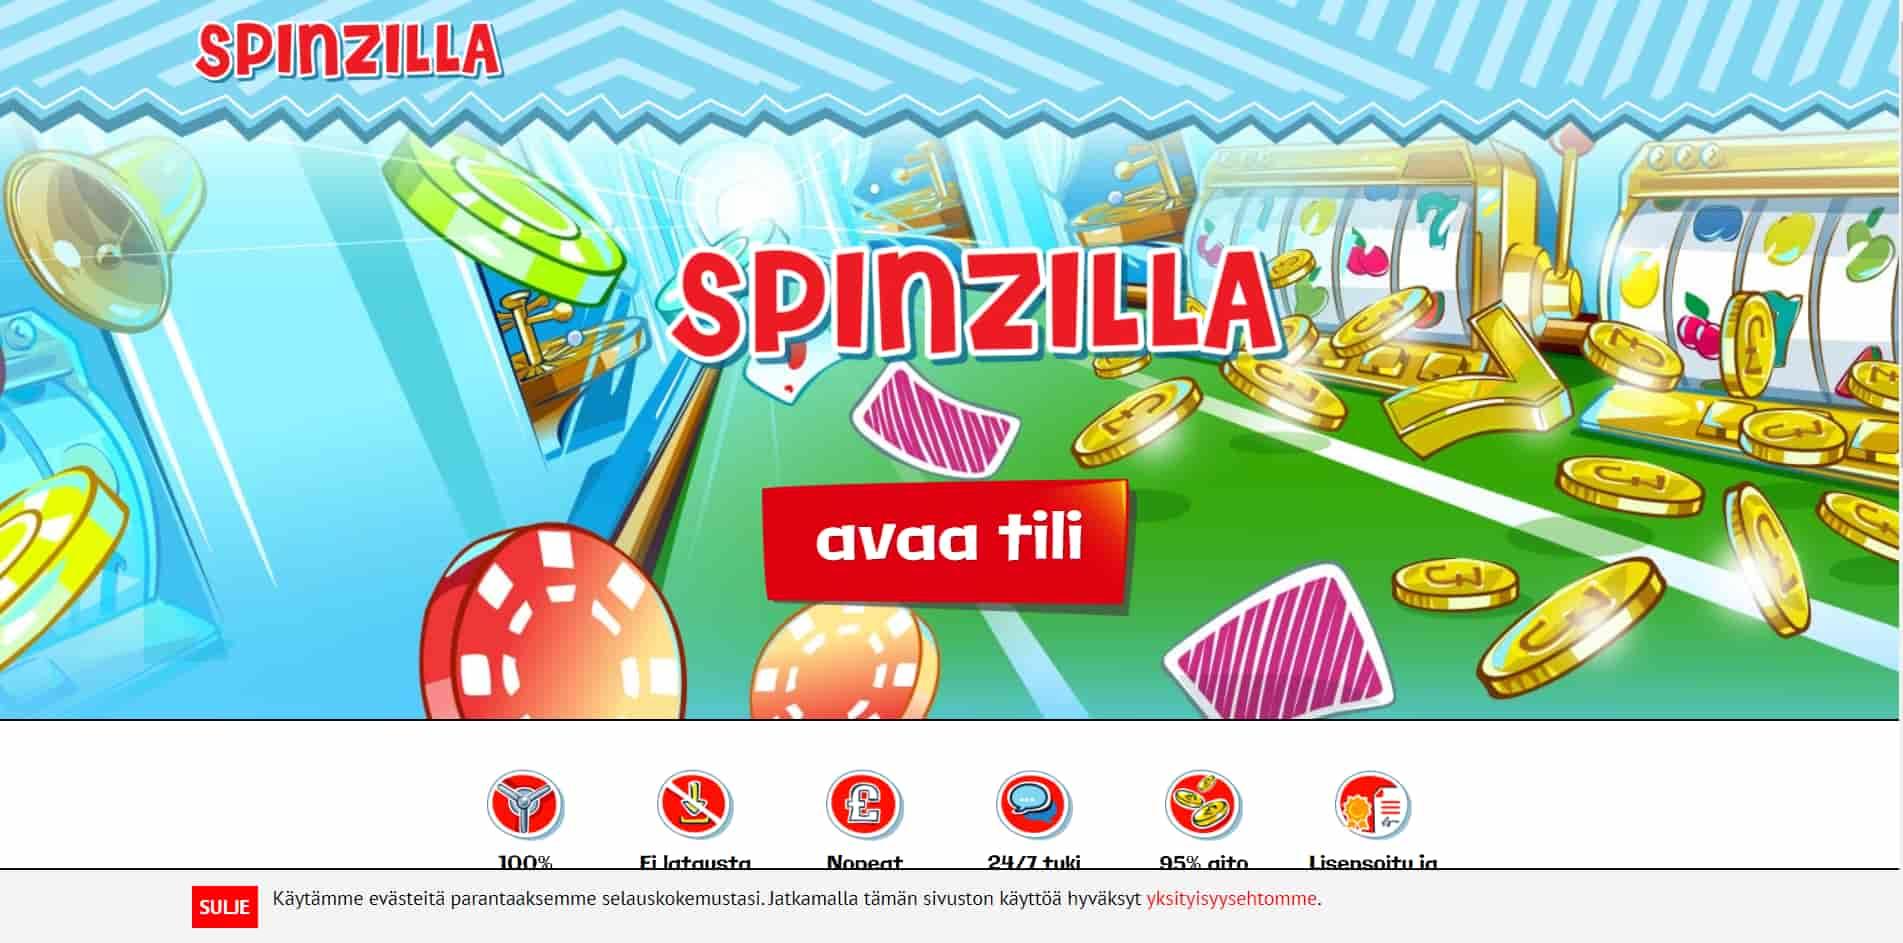 Spinzilla casino homepage